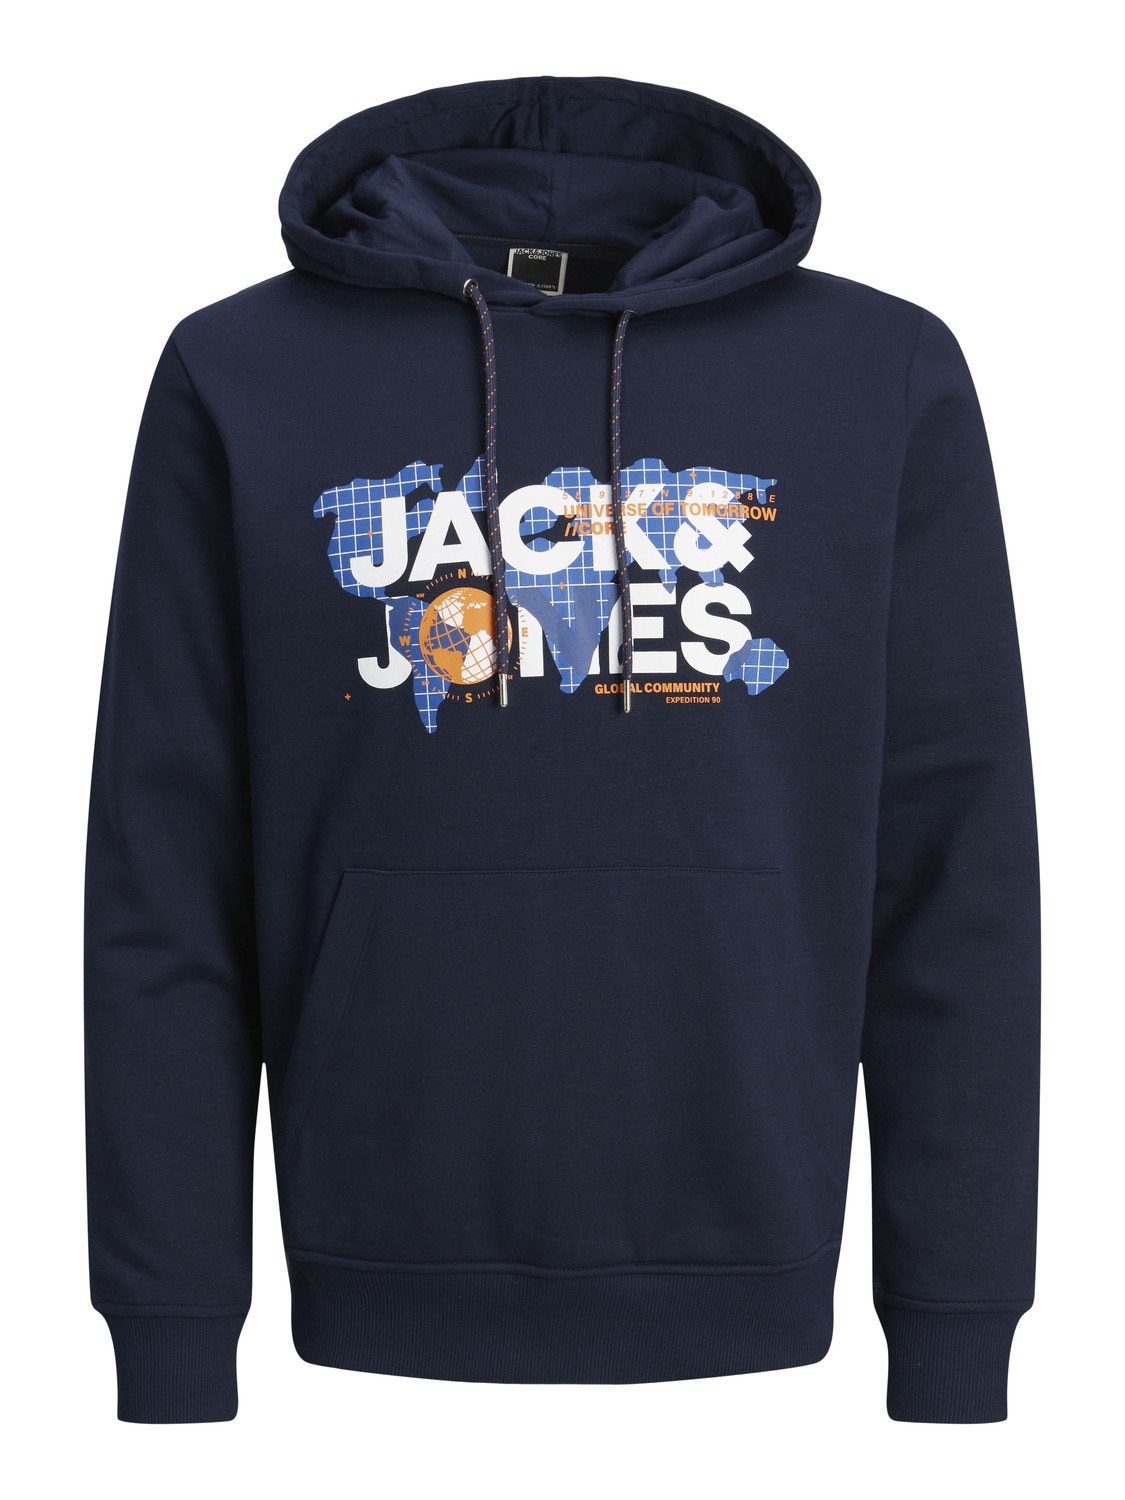 Jack & Jones Z logo Bluza z kapturem -Navy Blazer - 12240214